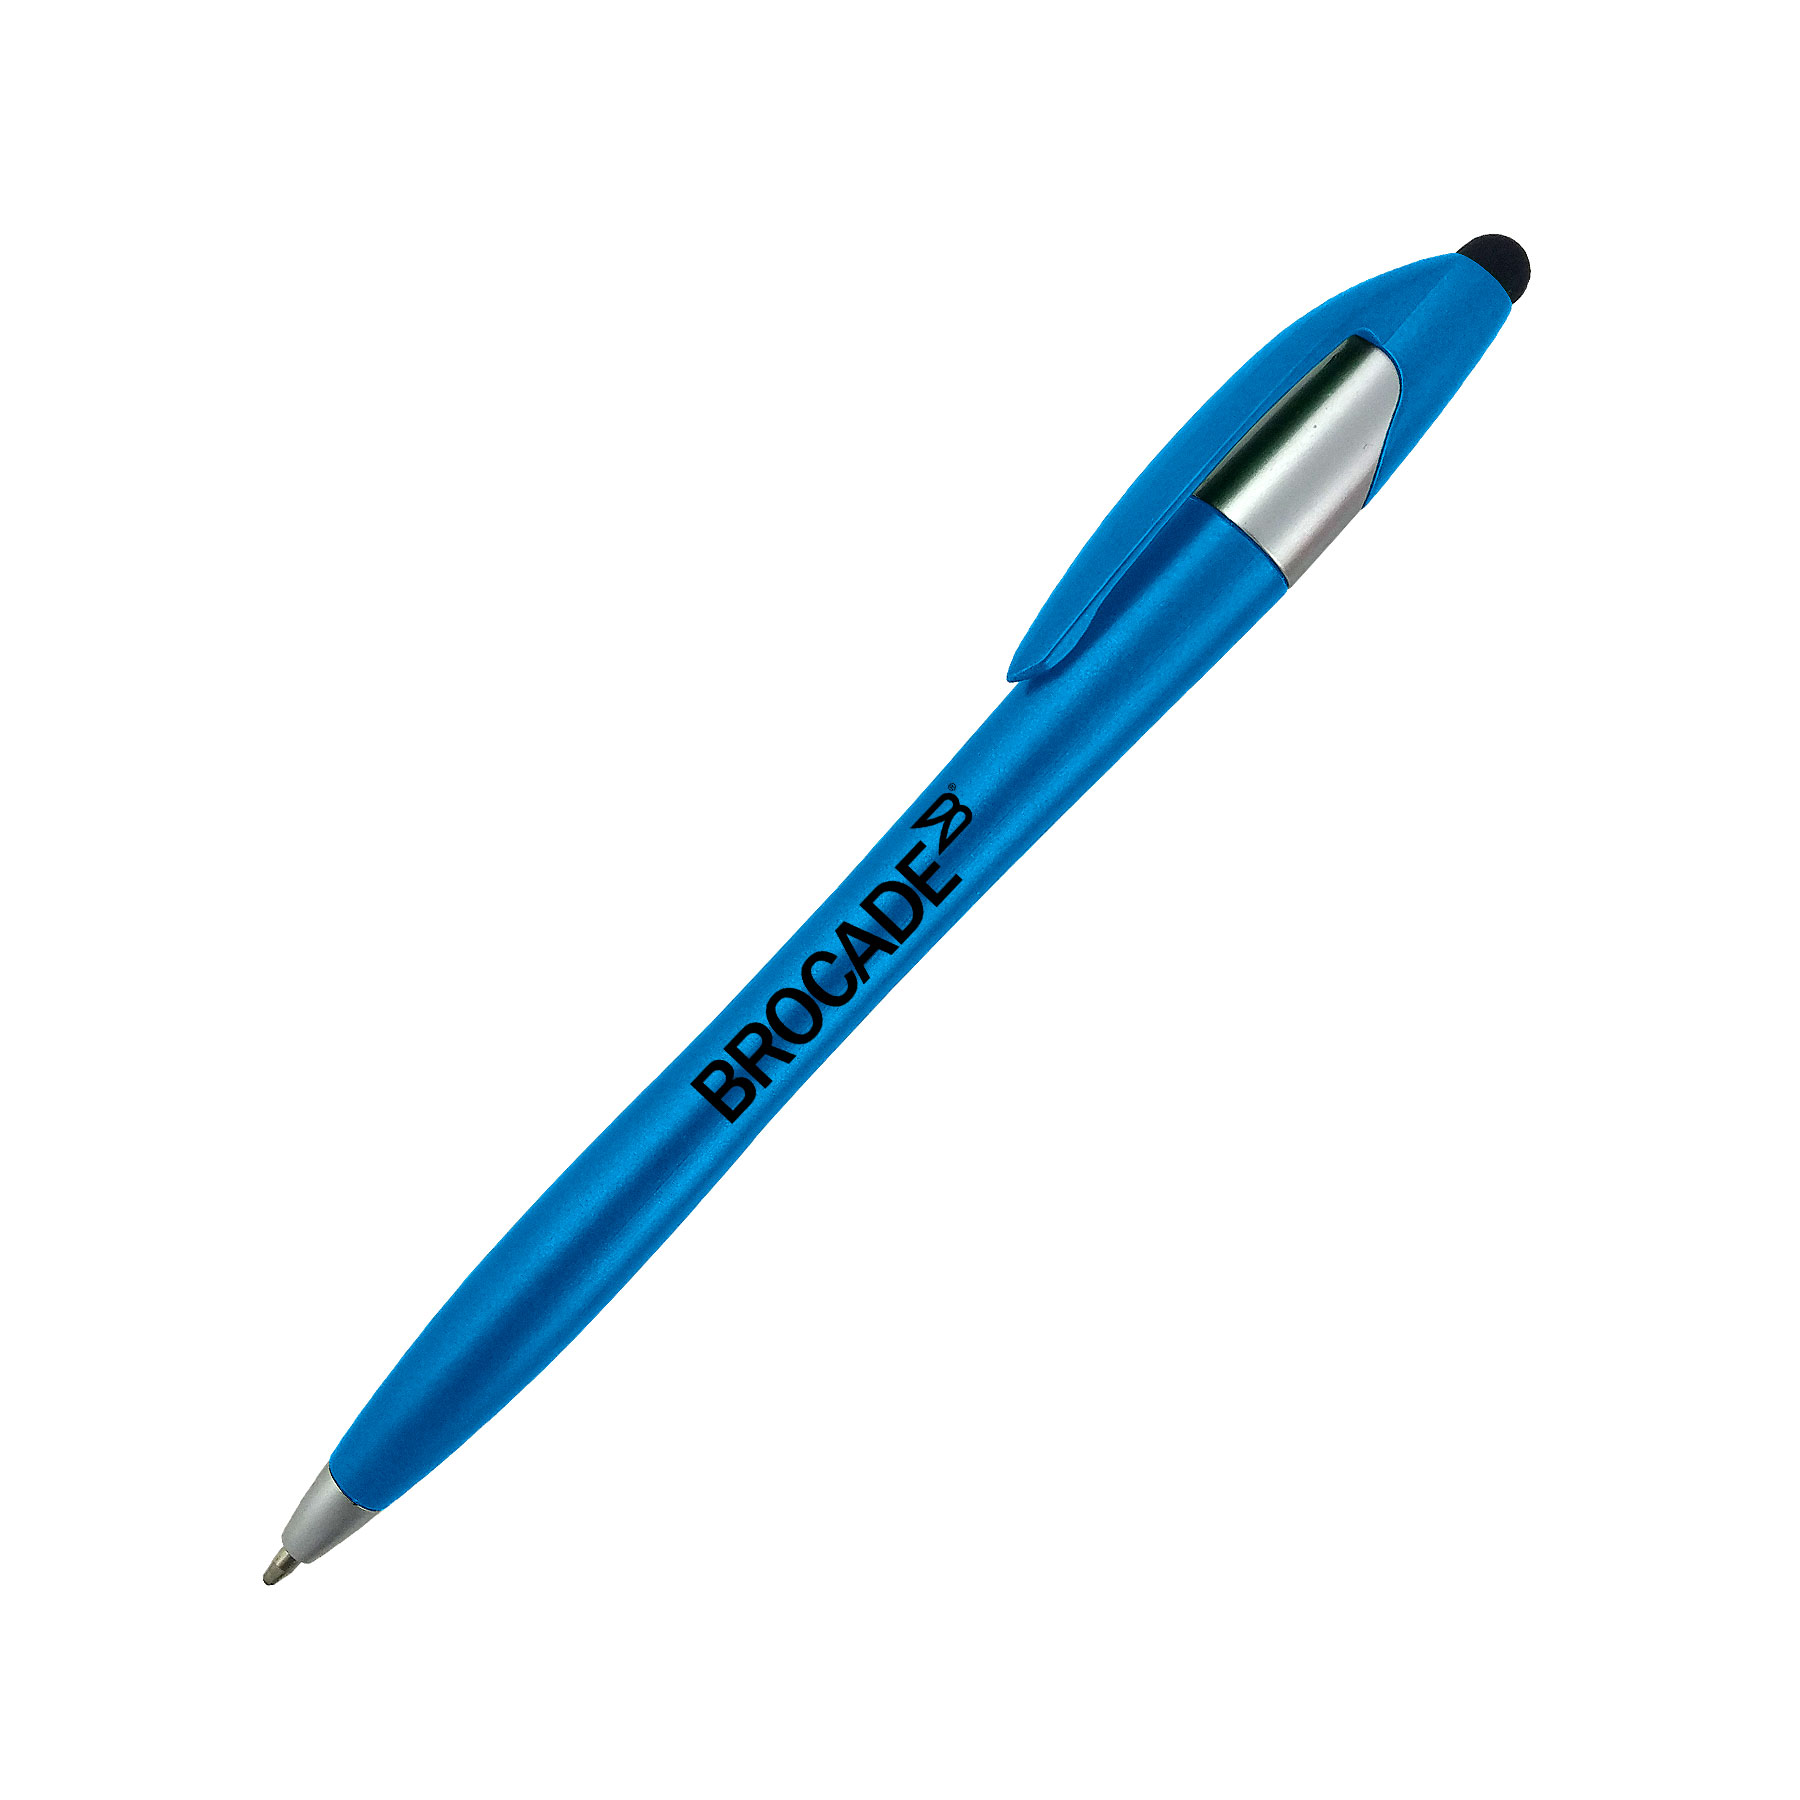 Blue pens. Голубая Pen. Blue Pen. Blue Pen 2007. Perrectum Pen Blue.